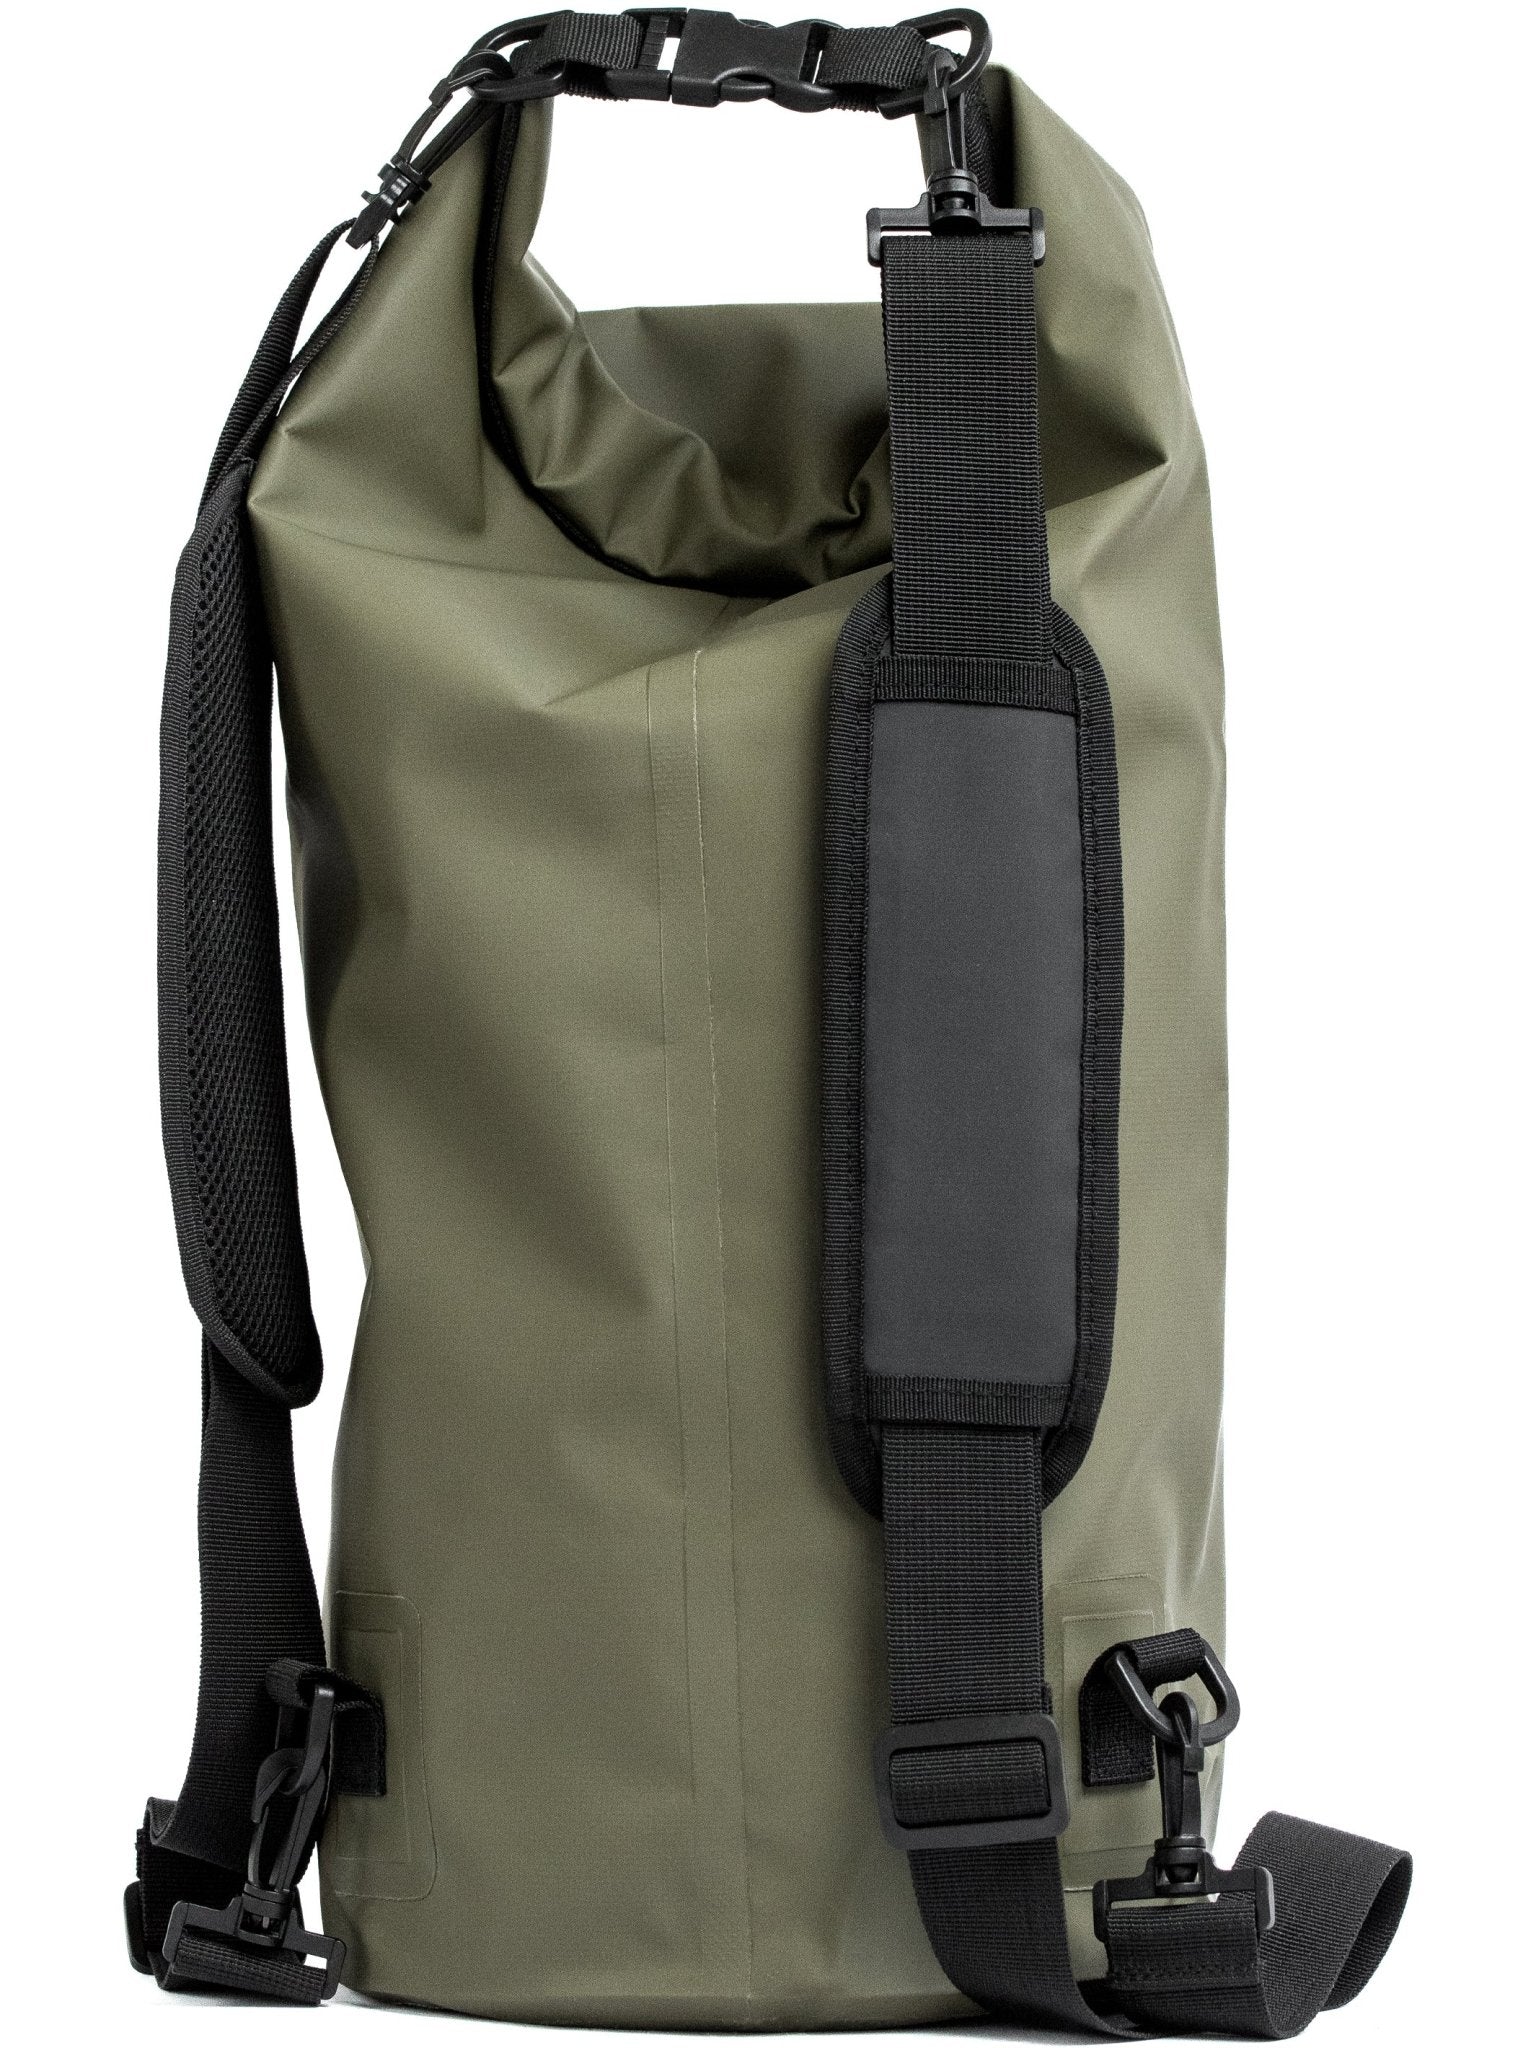 4elementsclothing4 Elements Clothing4 Elements - Waterproof bag and Dry Bag Roll Top waterproof Rucksack, Wet bag & Hiking, waters sports or camping bag, 20L drybagBag4EC-DBG20-GN